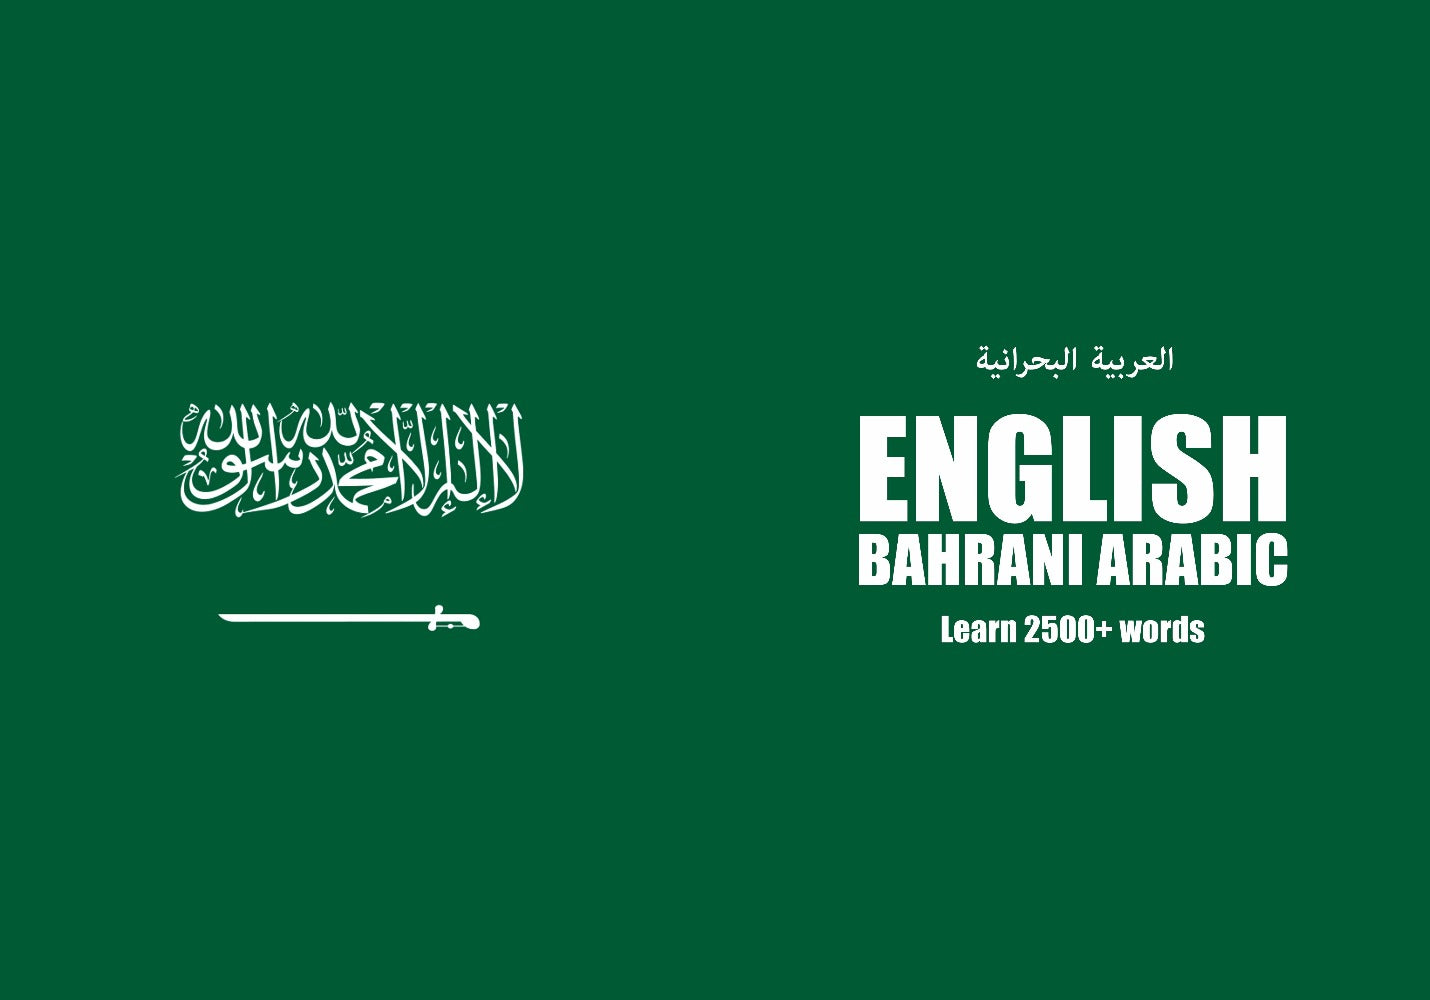 Bahrani Arabic of Saudi Arabia notebook cover appearance